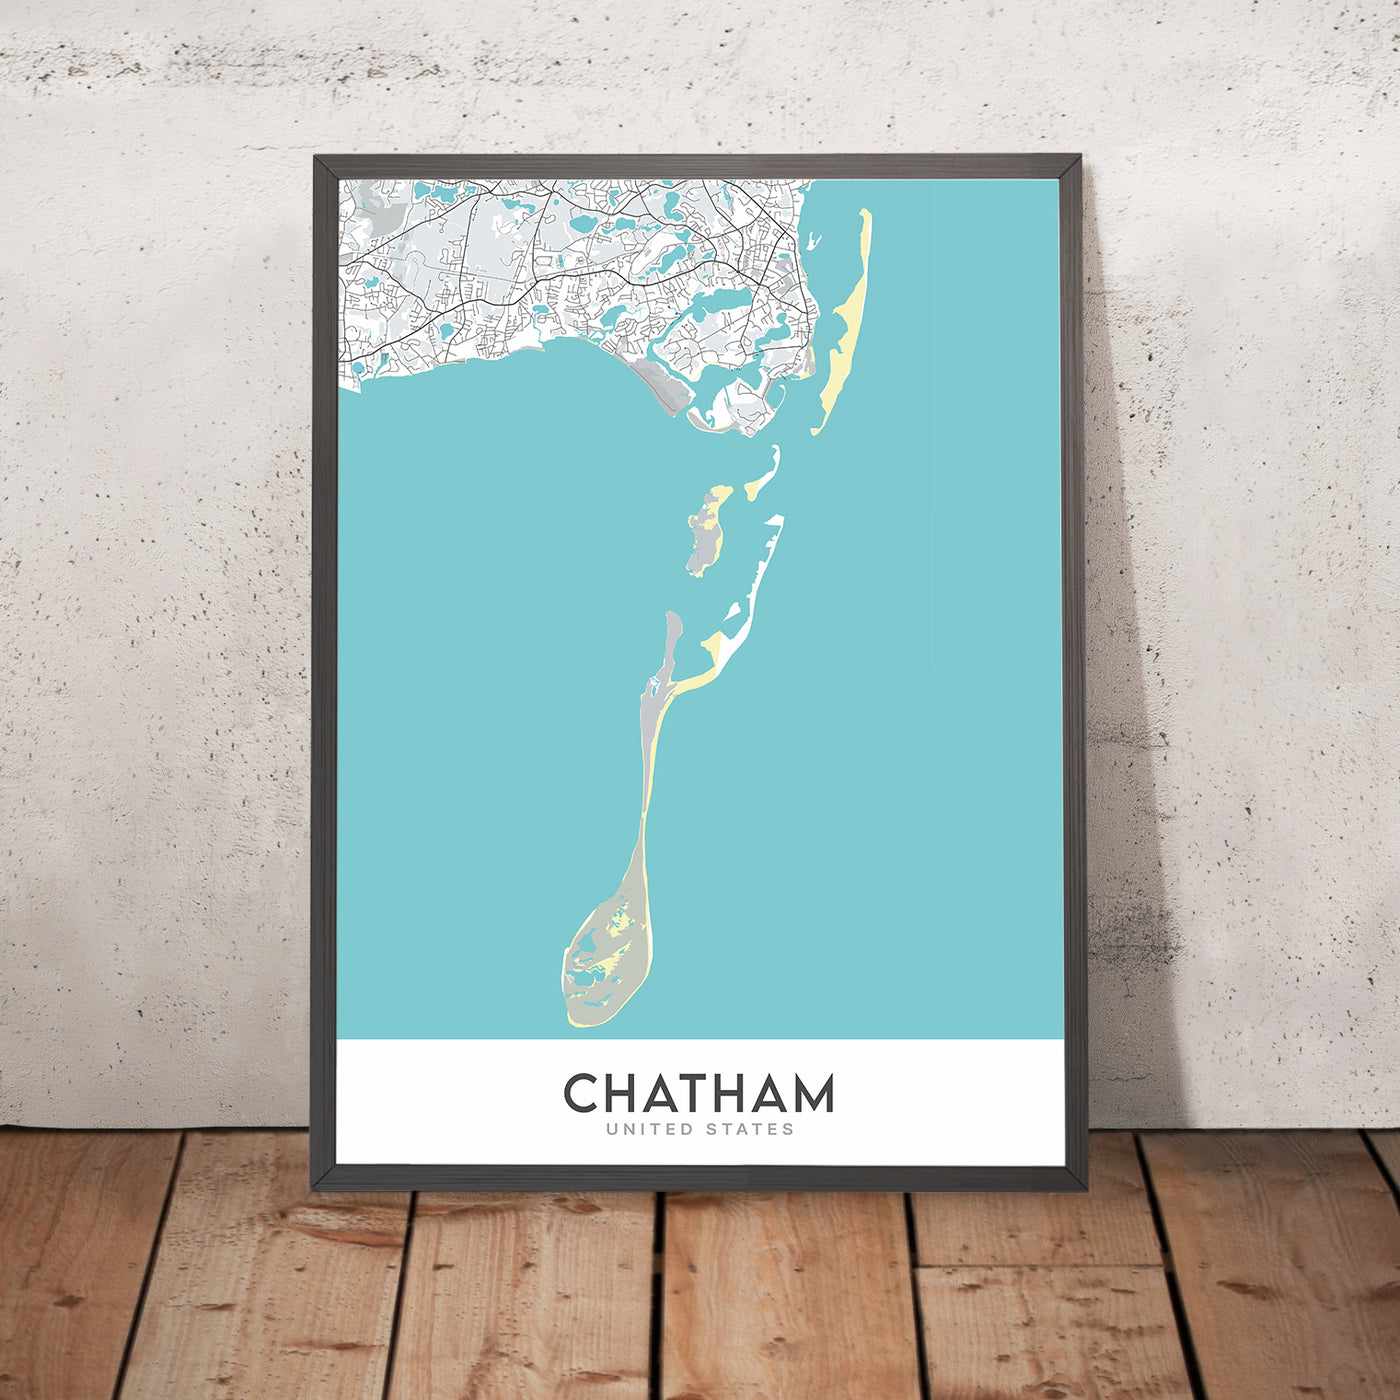 Mapa moderno de la ciudad de Chatham, MA: faro de Chatham, muelle de peces de Chatham, museo del ferrocarril de Chatham, ruta 28, Pleasant Bay